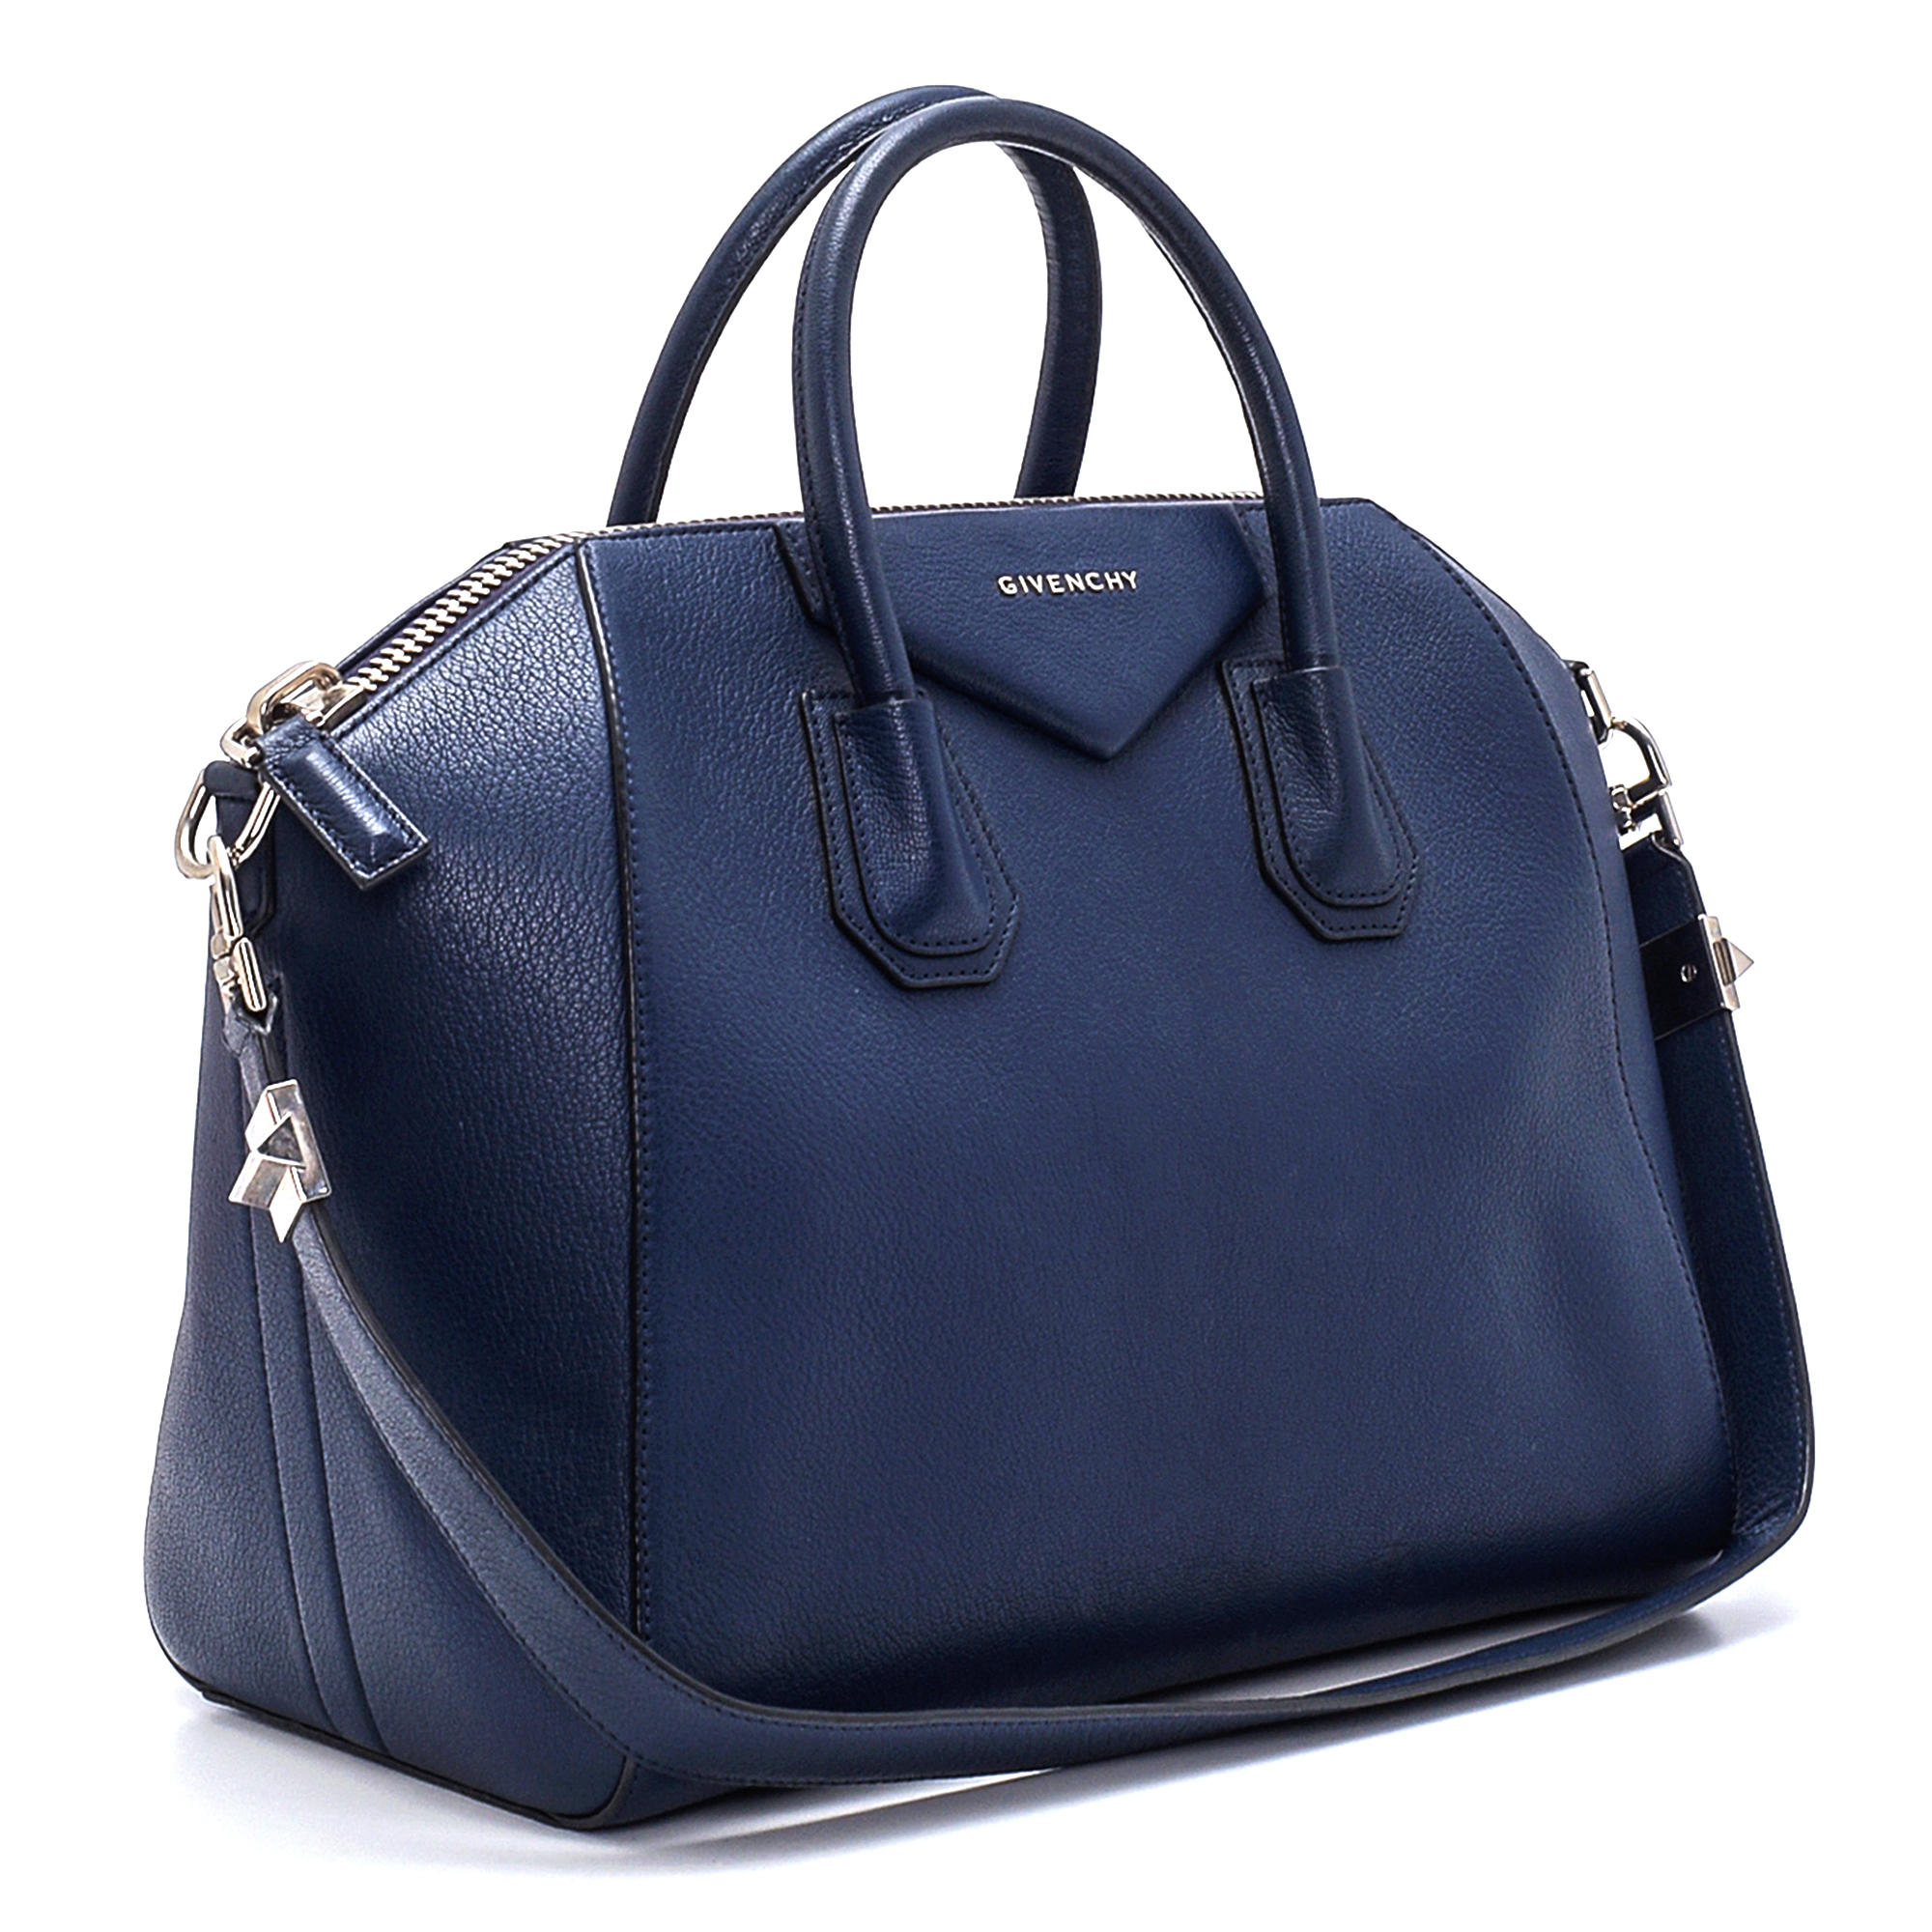 Givenchy - Navy Blue Leather Medium Antigona Bag